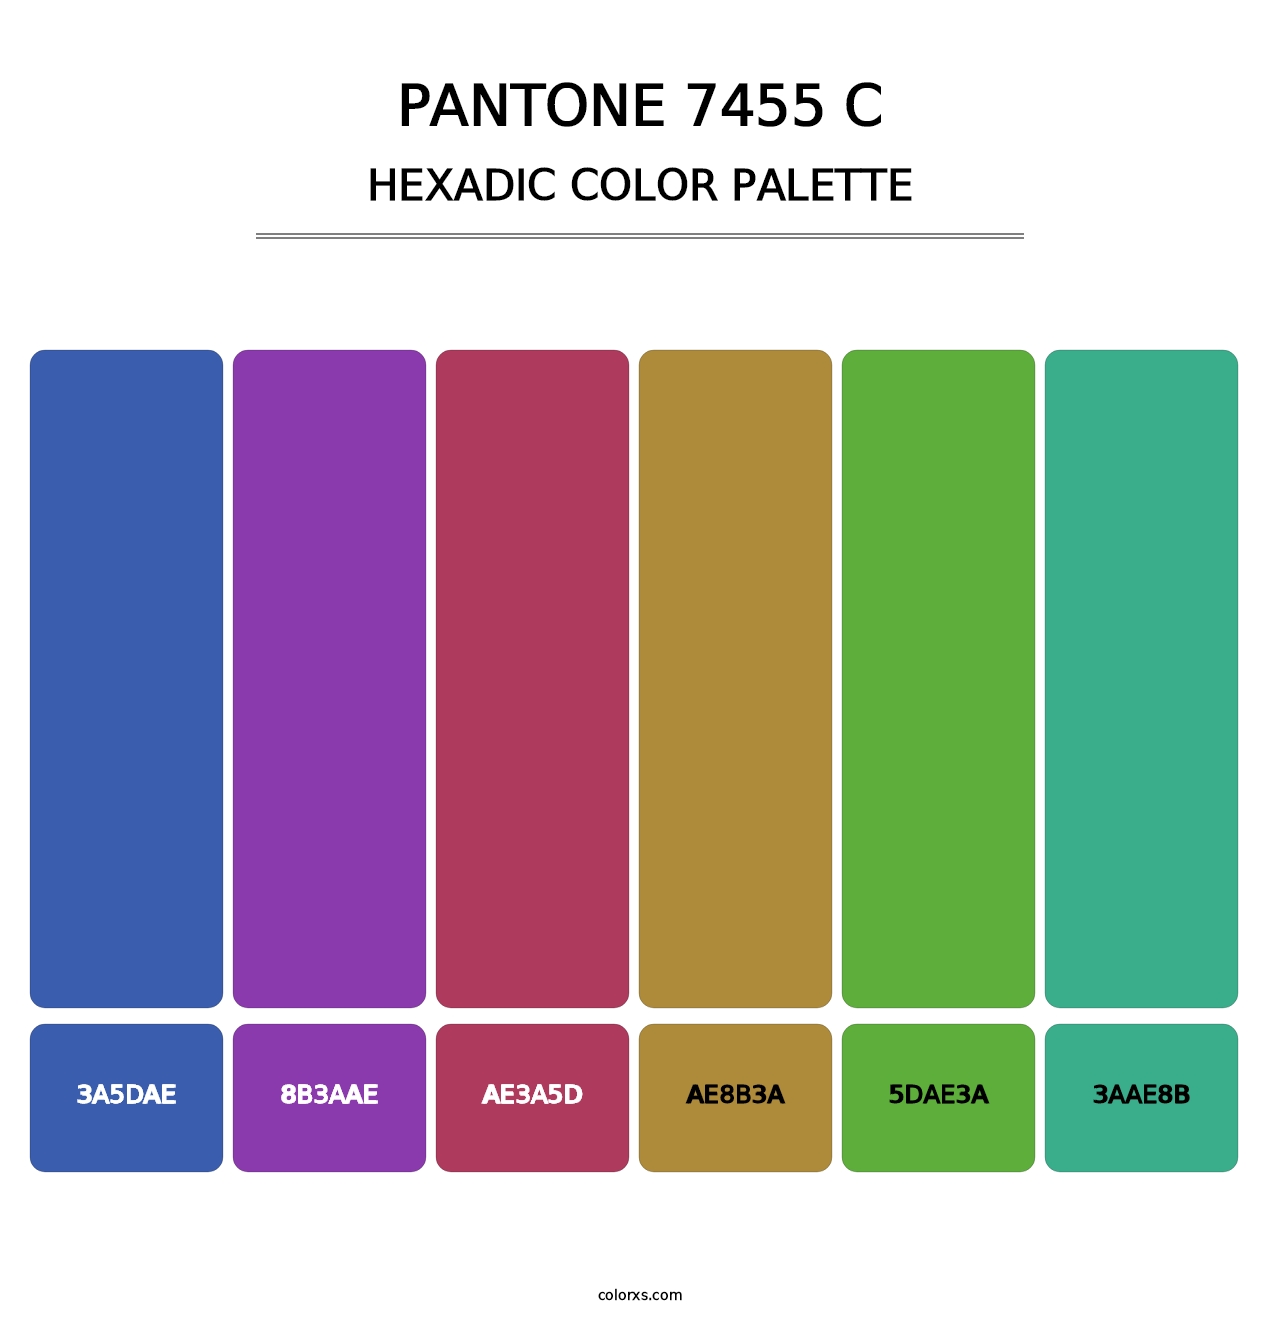 PANTONE 7455 C - Hexadic Color Palette